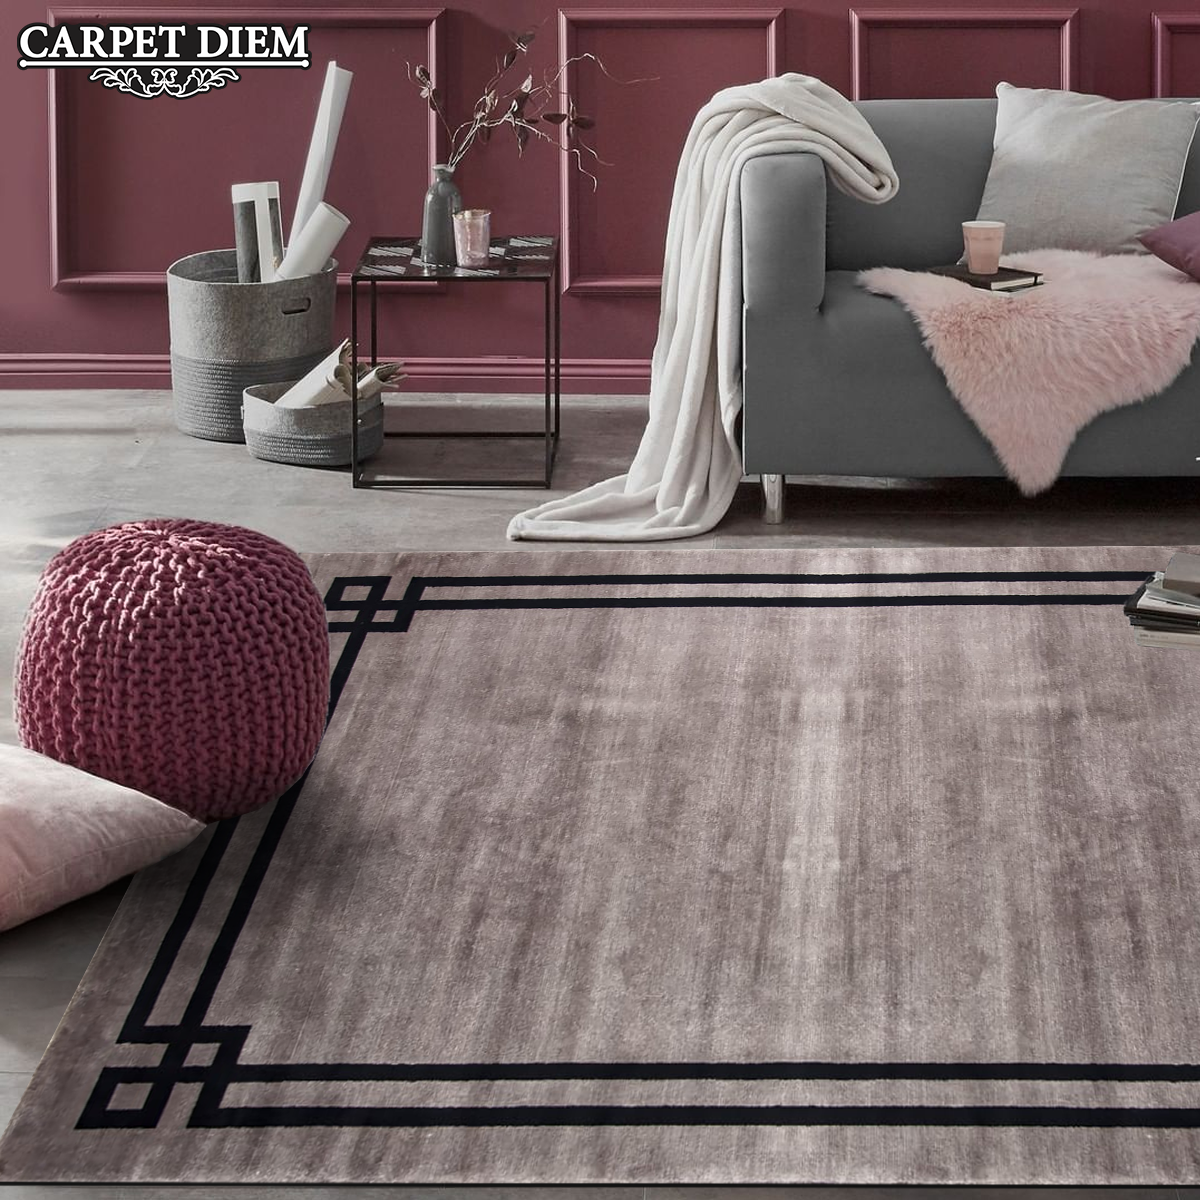 Digital Head - Carpet Diem